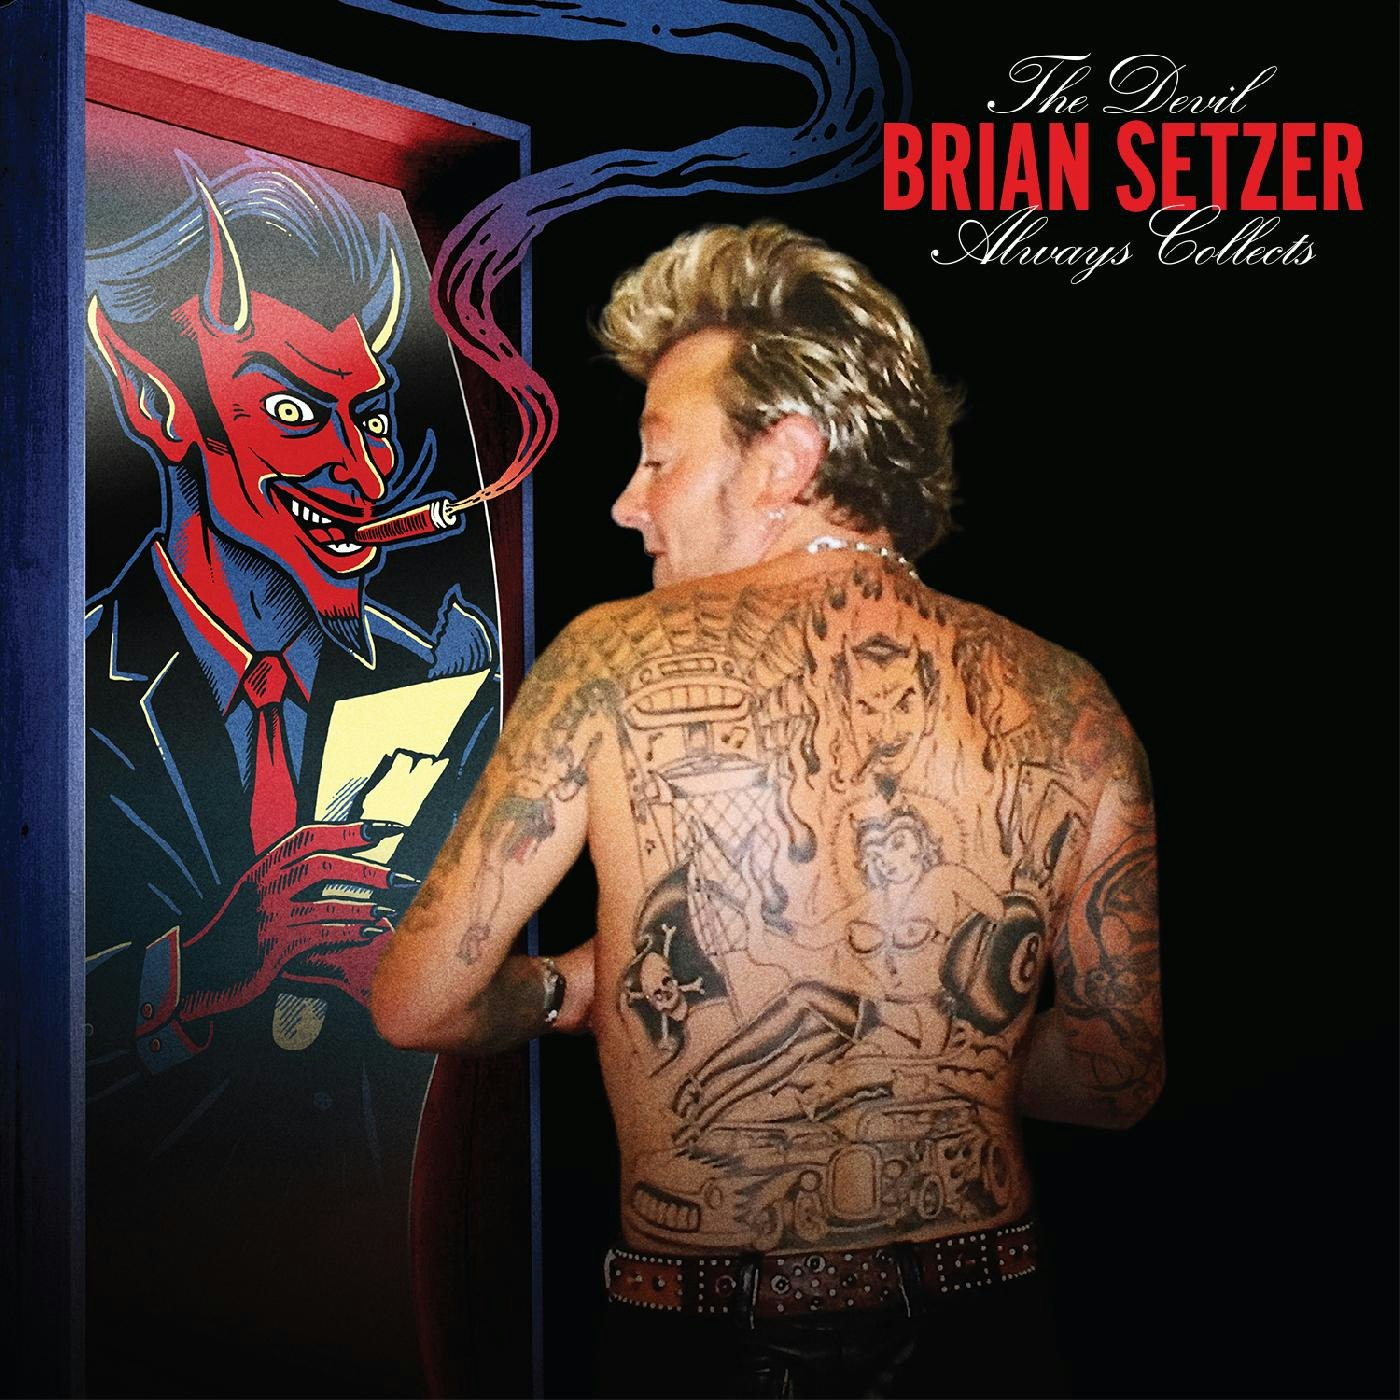 Setzer, Brian - The Devil Always Collects | Lp/Red